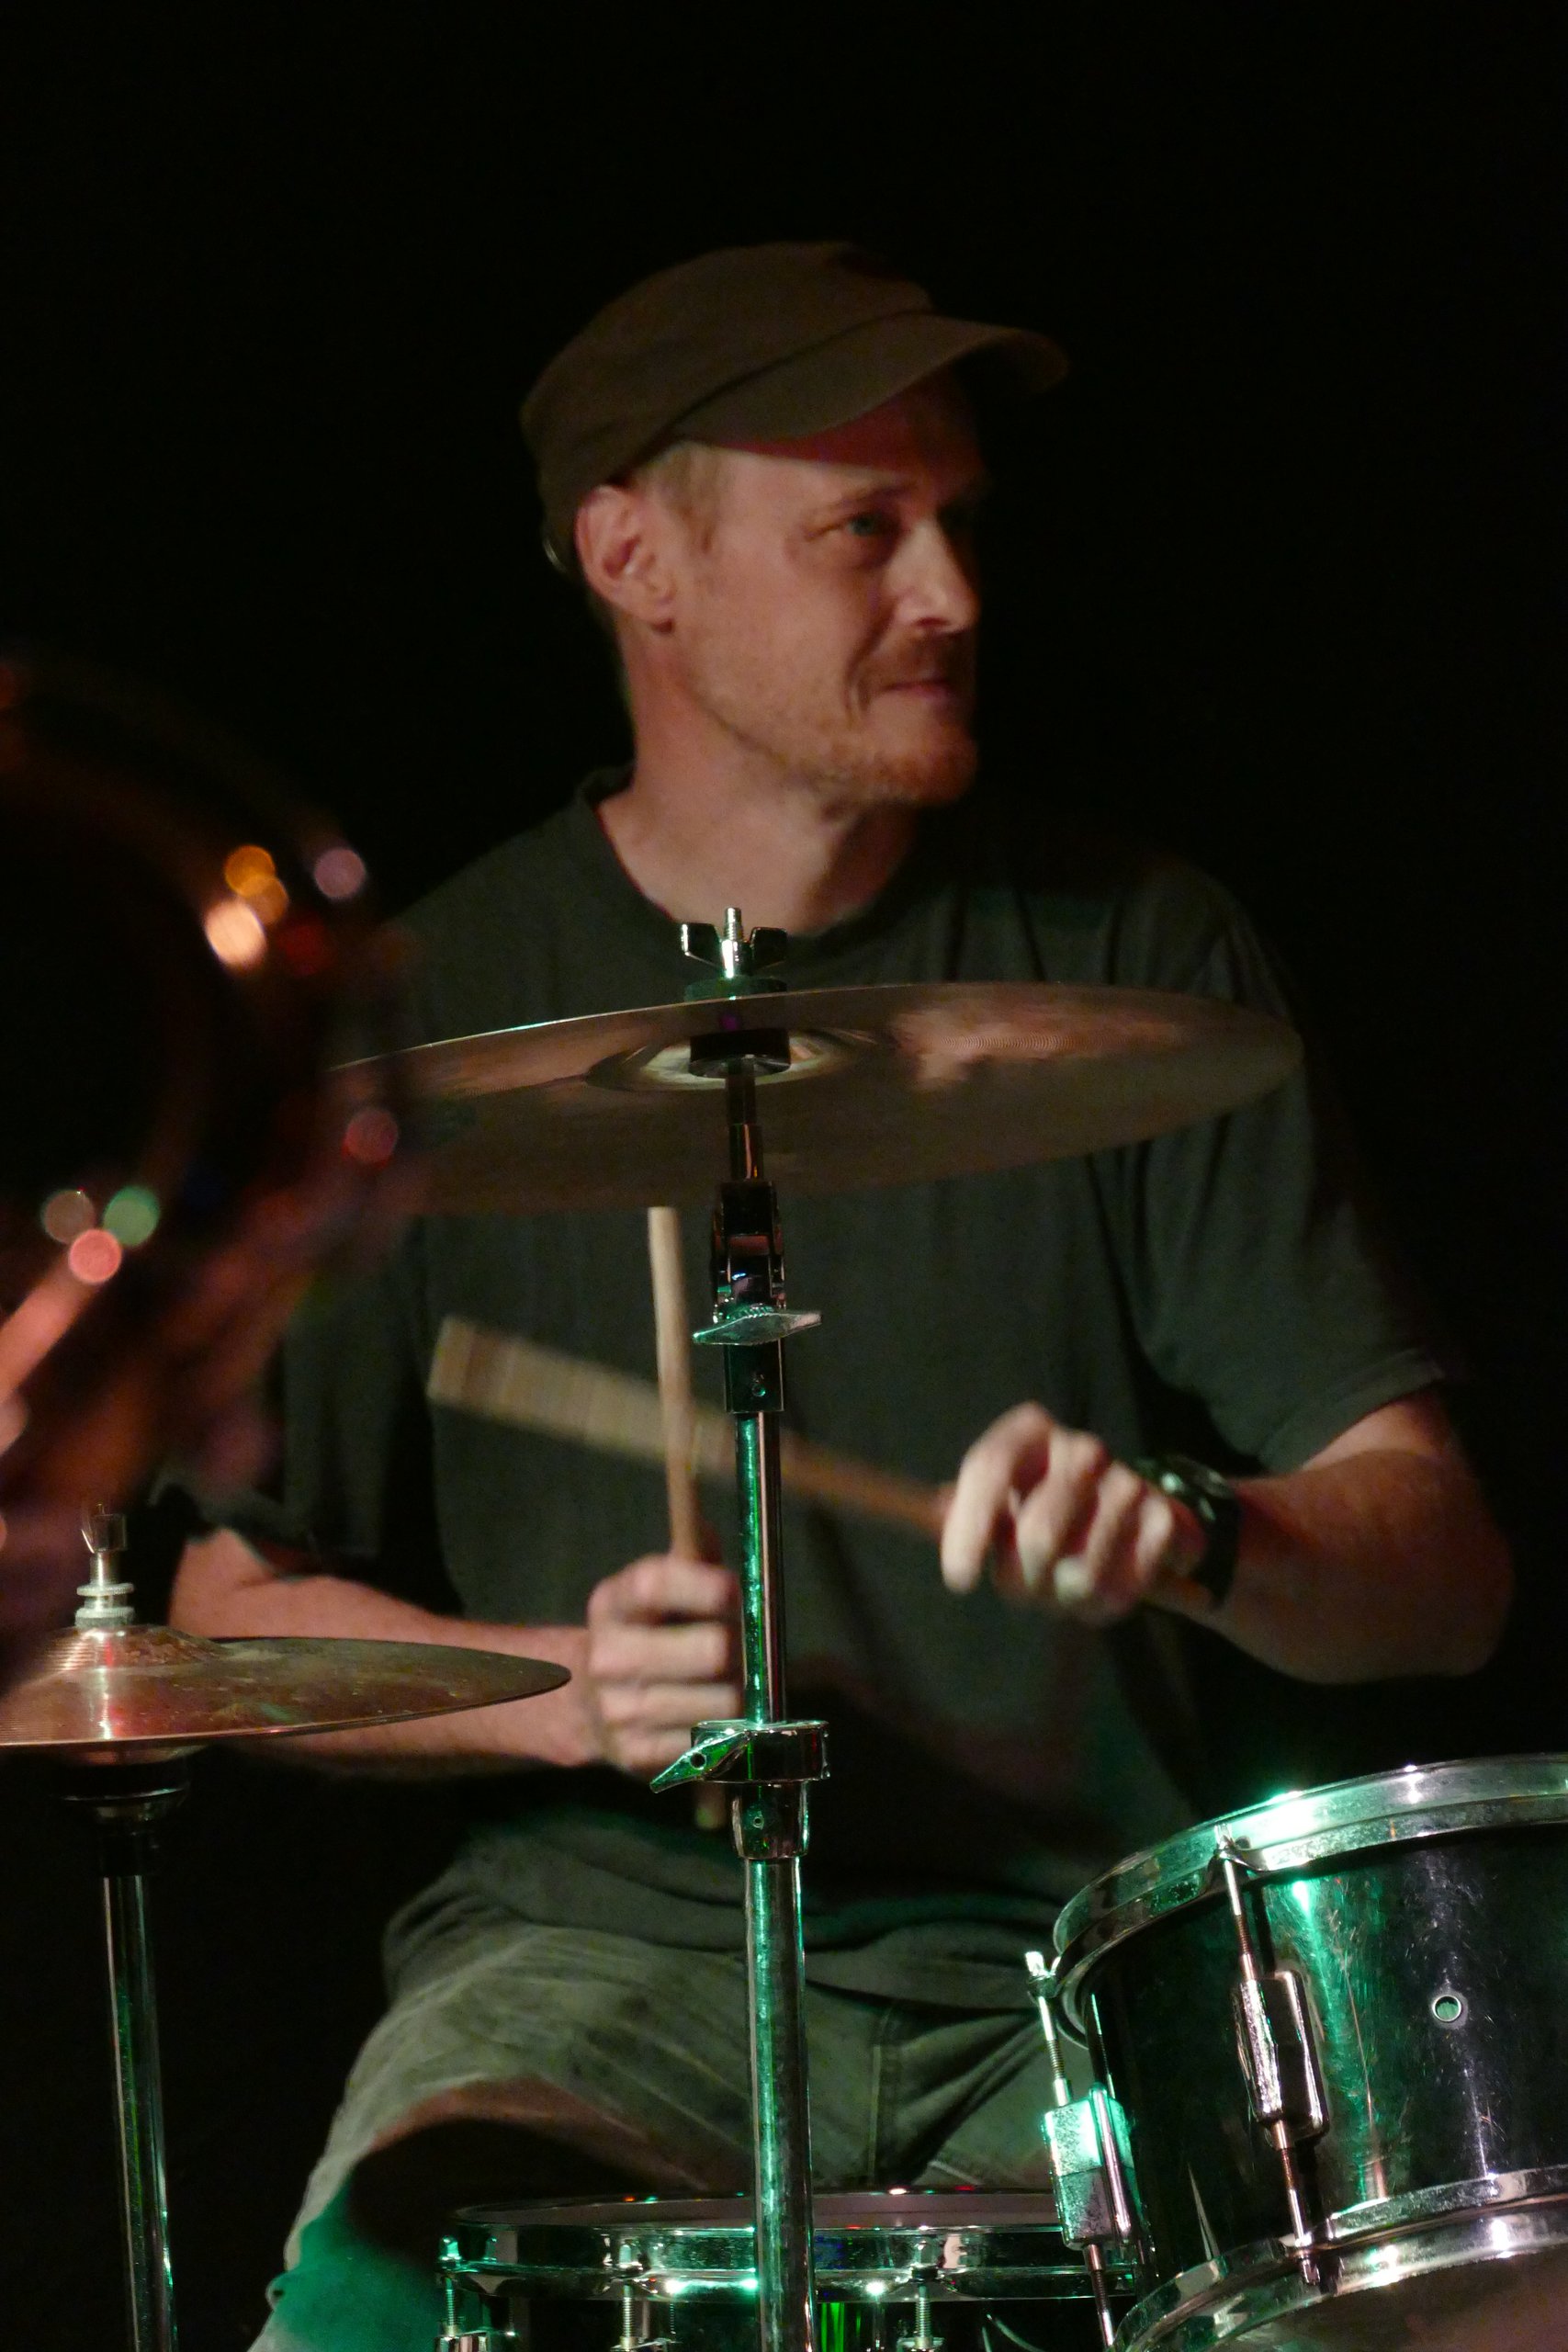 Julian Stähle – Drums